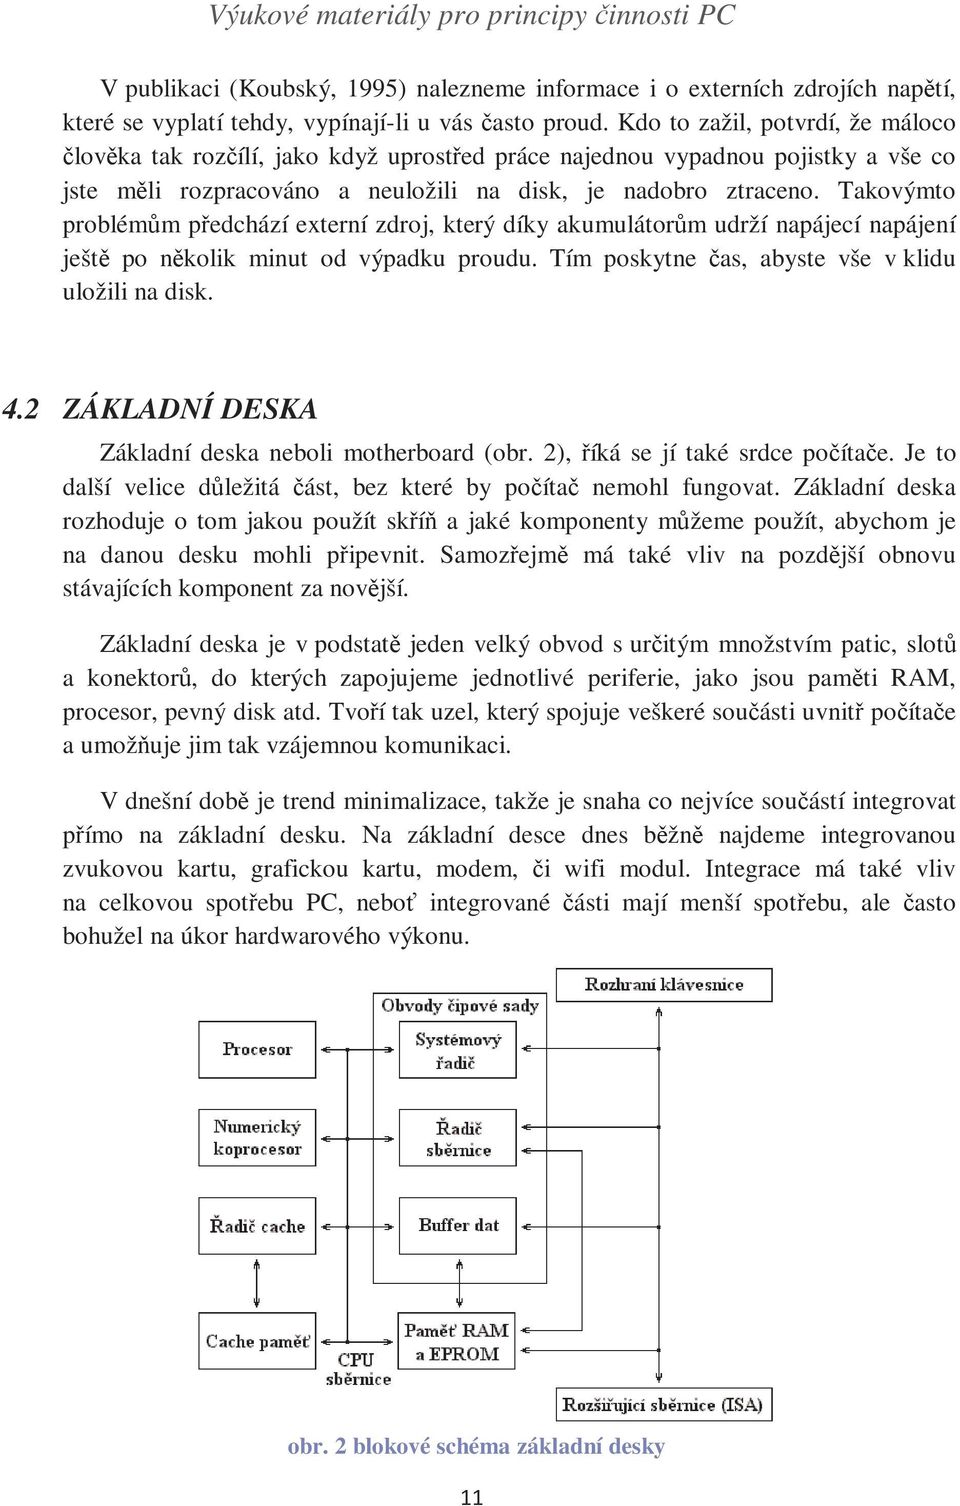 MASARYKOVA UNIVERZITA. Výukové materiály pro principy činnosti PC - PDF  Free Download